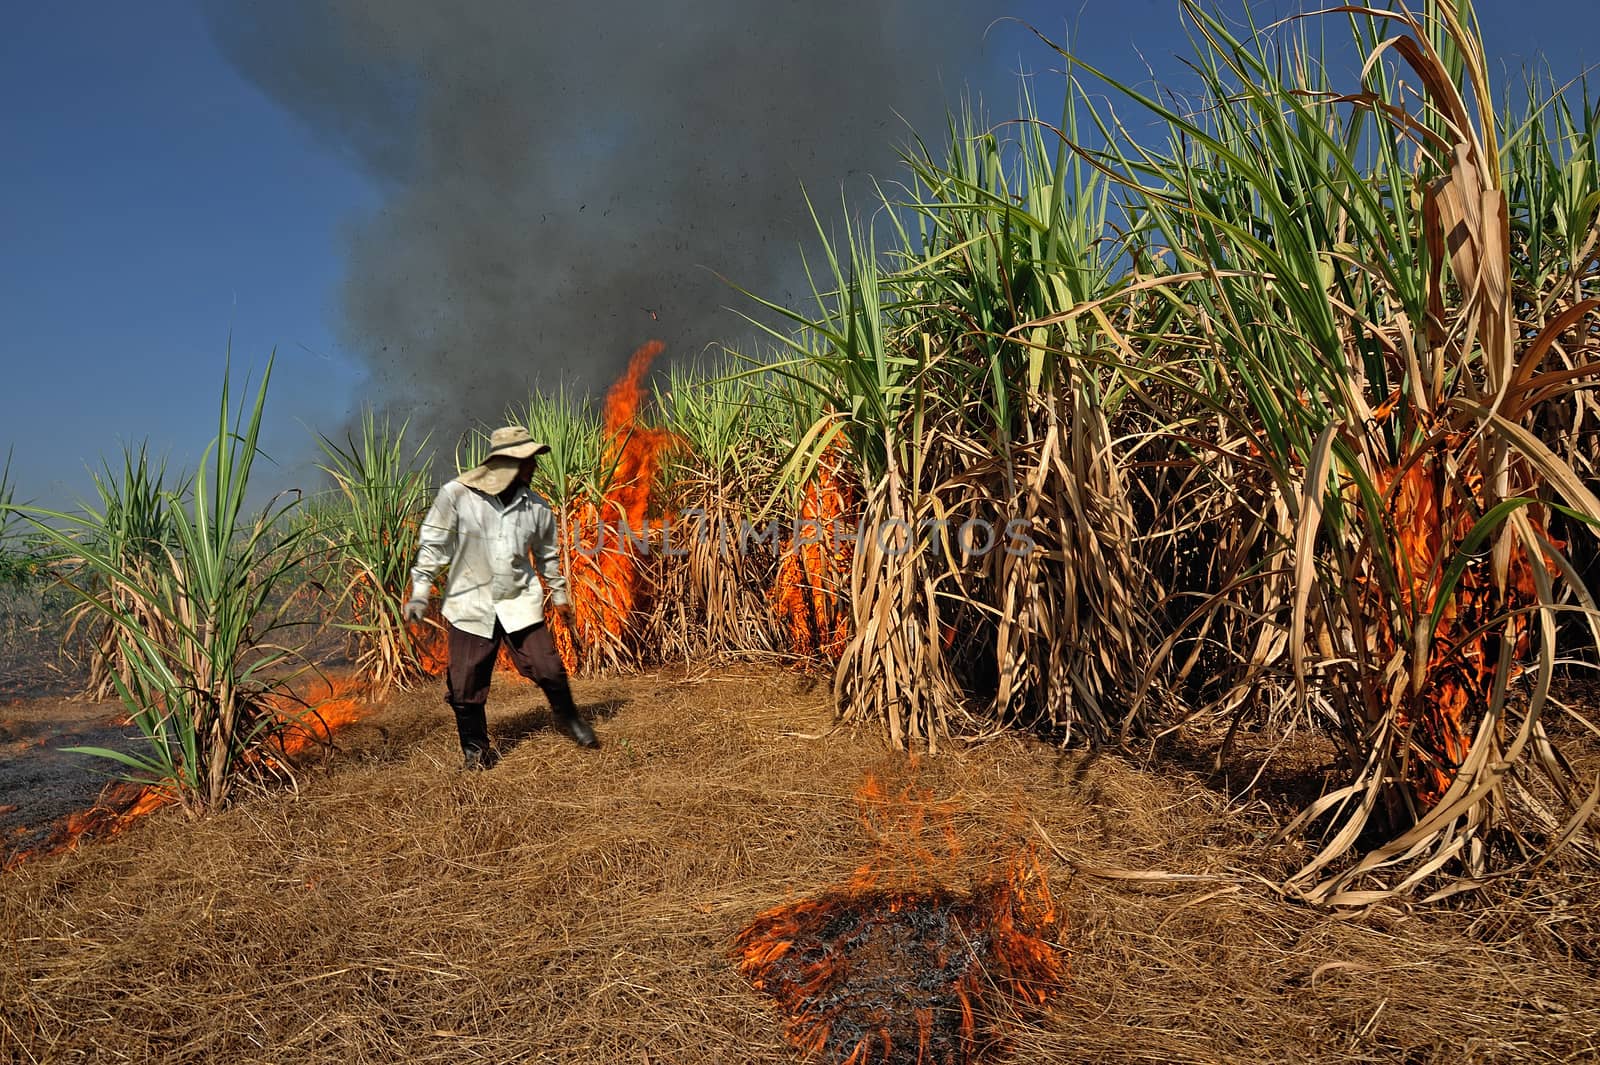 Sugarcane field burning in Thailand